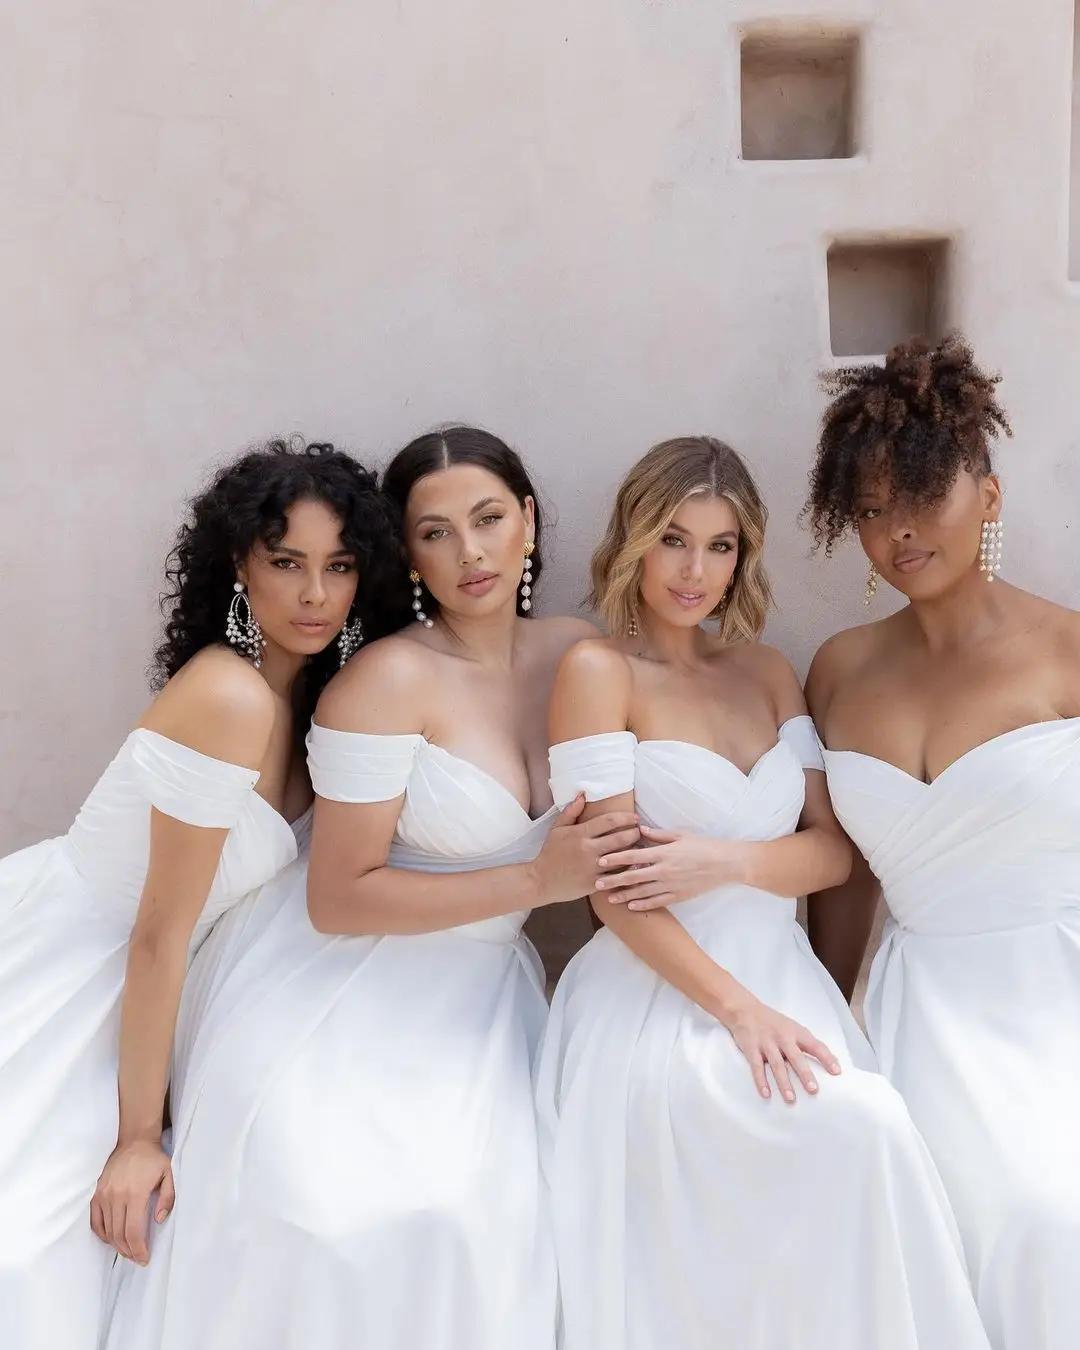 Models wearing multiple sizes of the same wedding dress